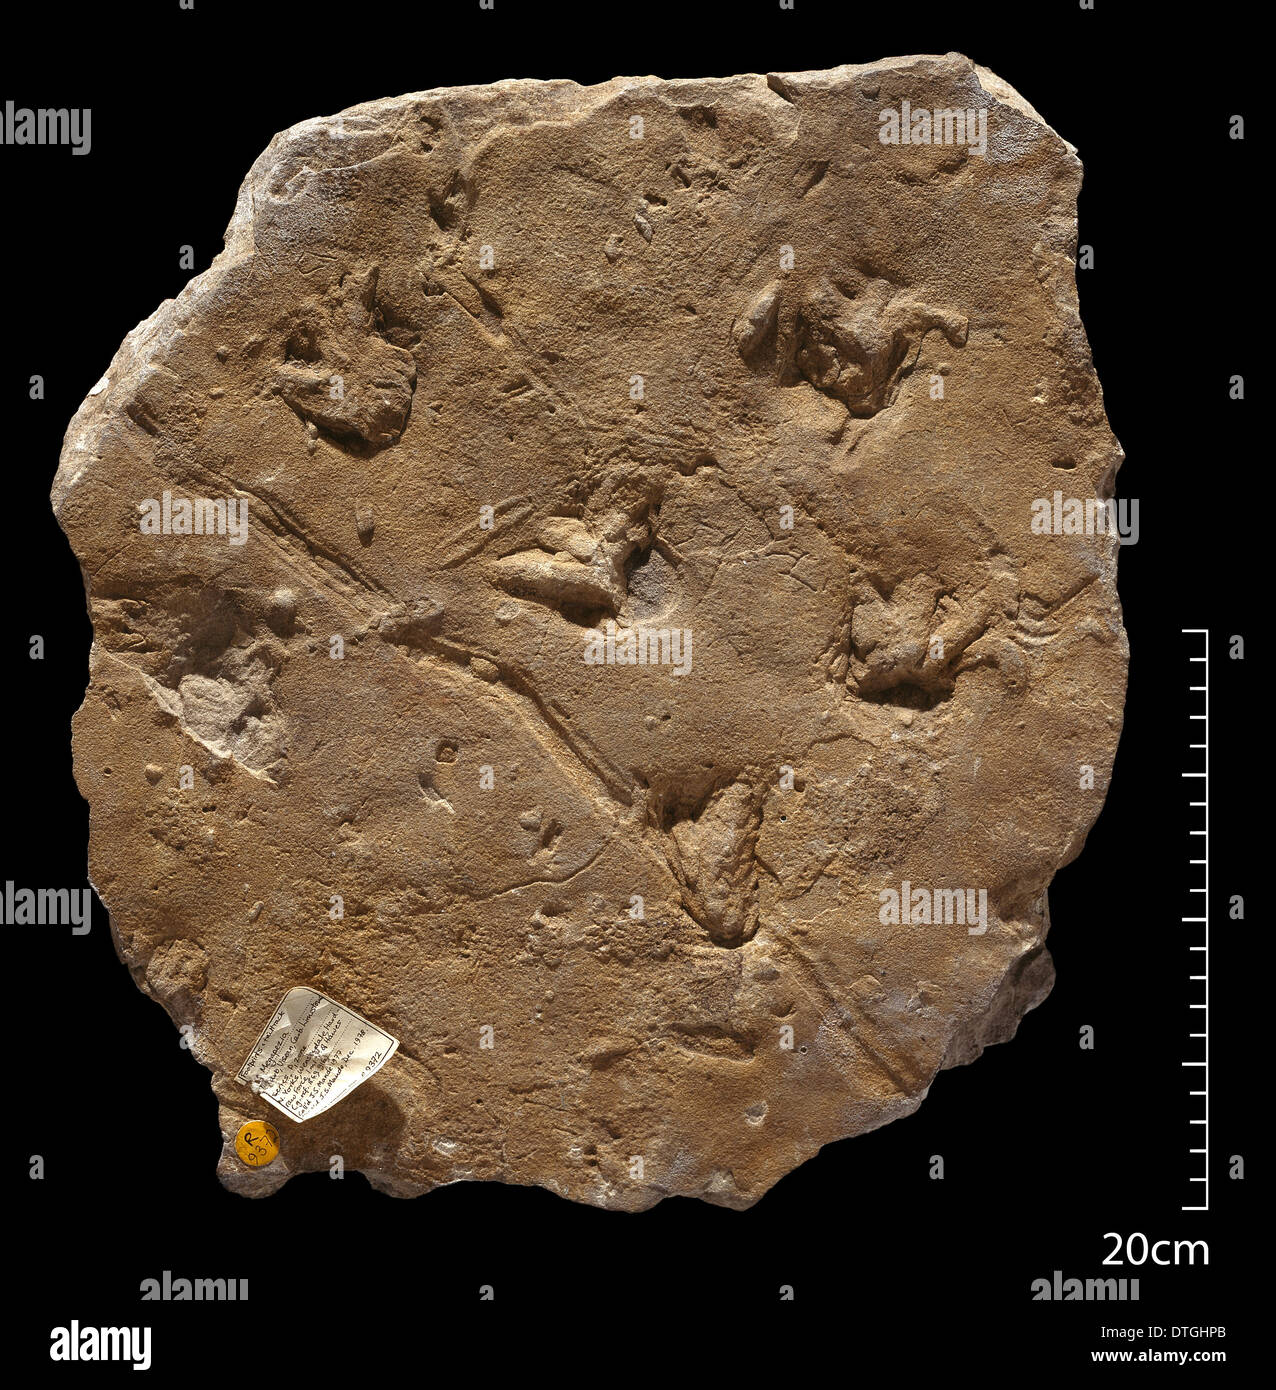 Fossile Amphibien Fußabdrücke Stockfoto